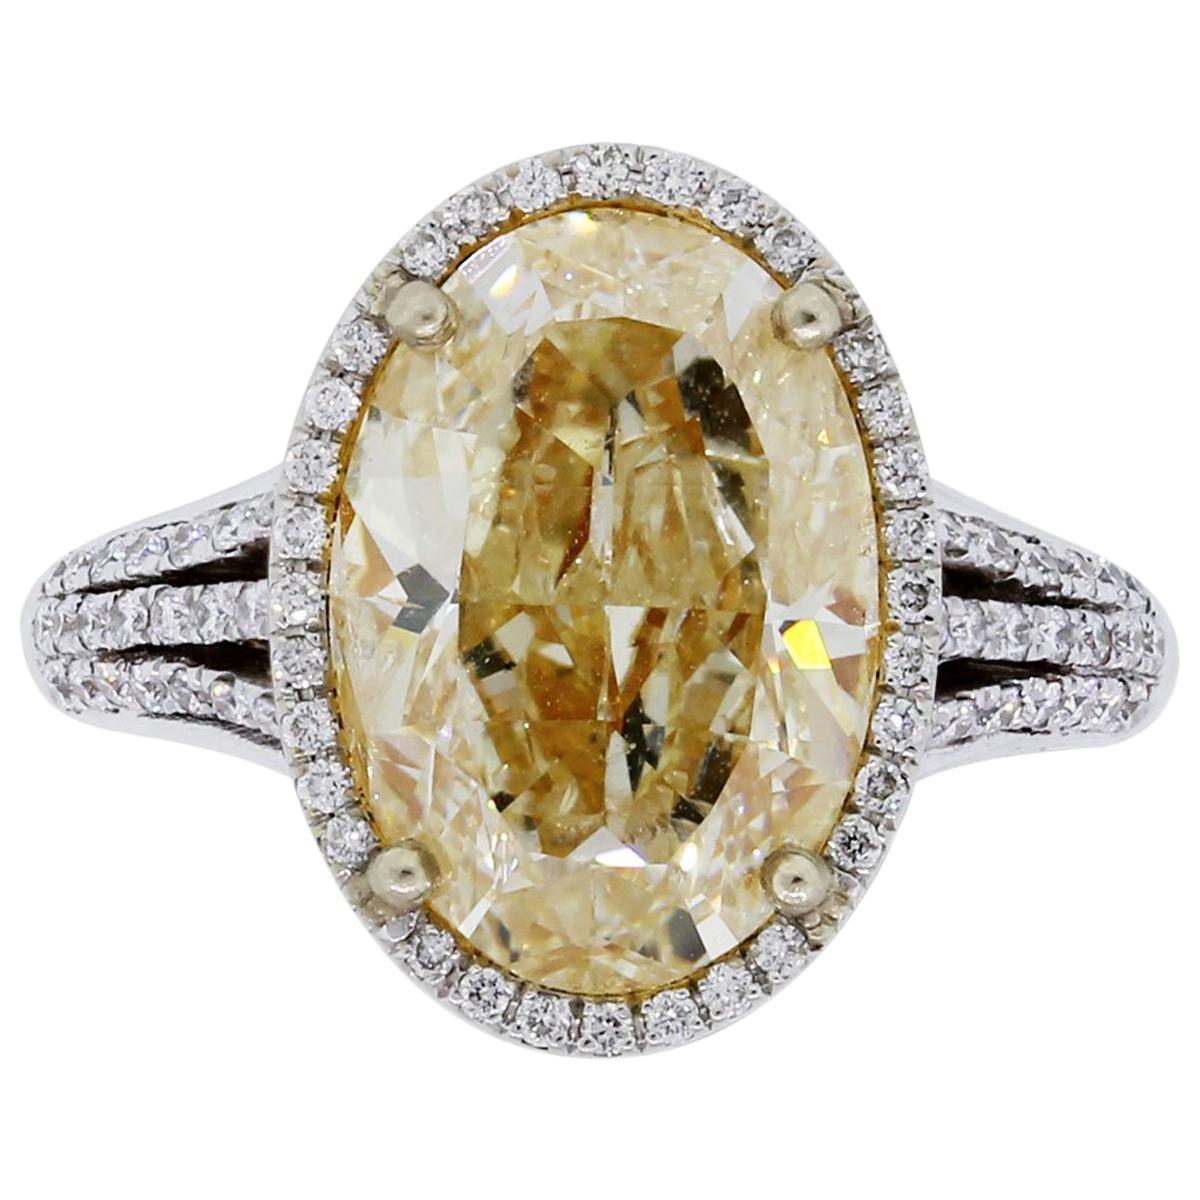 6.34 Carat Fancy Yellow Oval Cut Diamond Engagement Ring